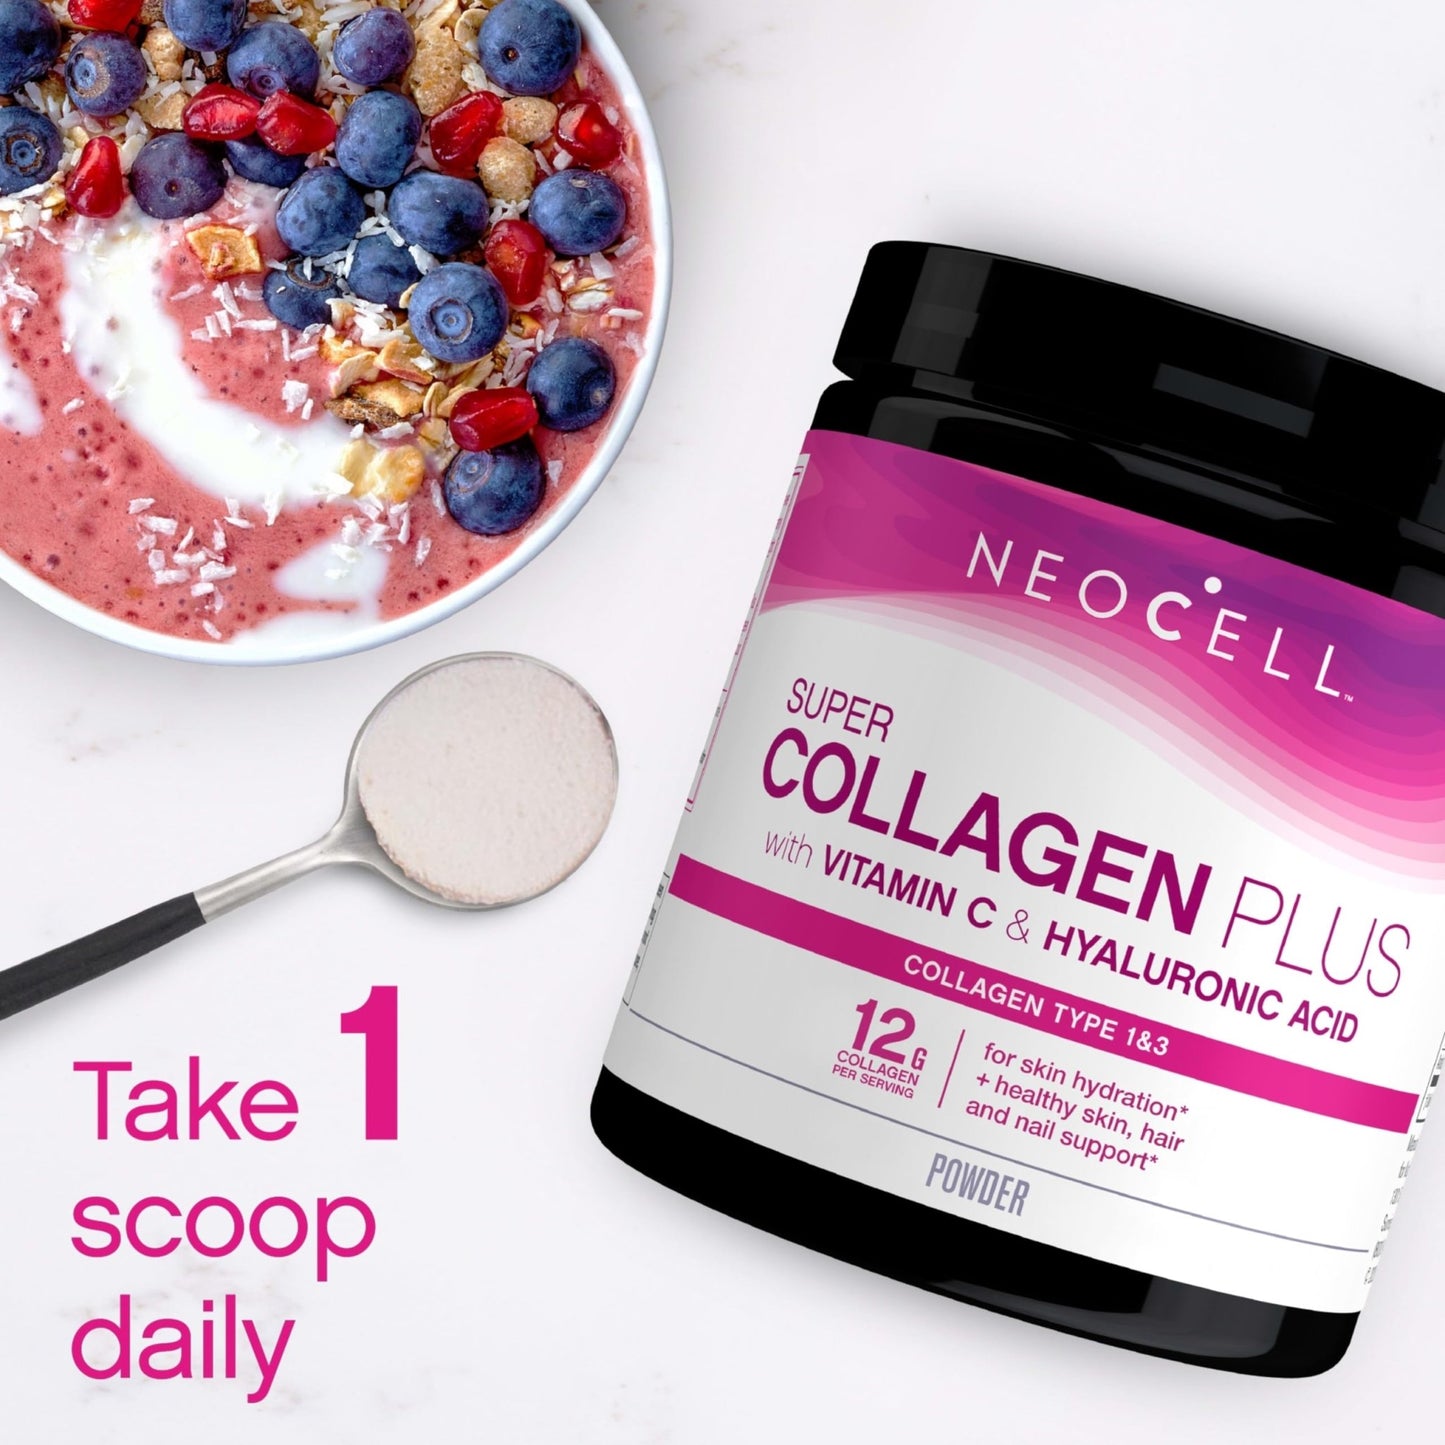 Neocell Super Collagen Plus Vitamin C & Hyaluronic Acid Powder 195g / 6.9oz Exp 08/2025 - Ome's Beauty Mart